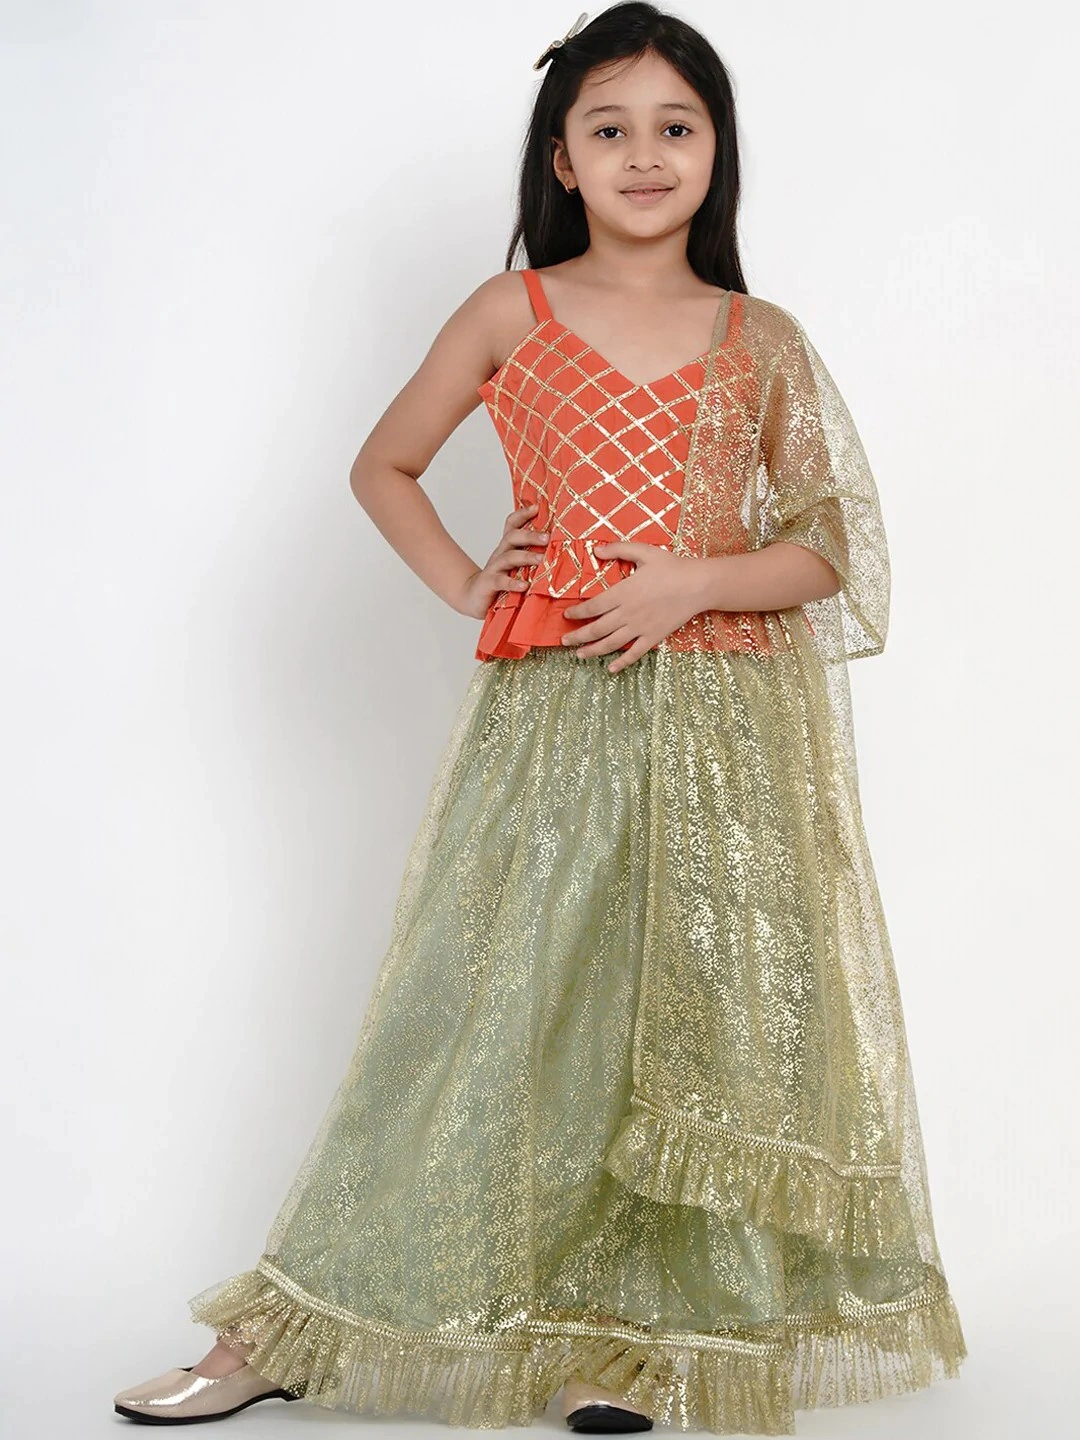 Bitiya by Bhama Girls Green &amp; Peach-Coloured Embellished Ready to Wear Lehenga &amp; Blouse with Dupatta-BBB166_6-7Y